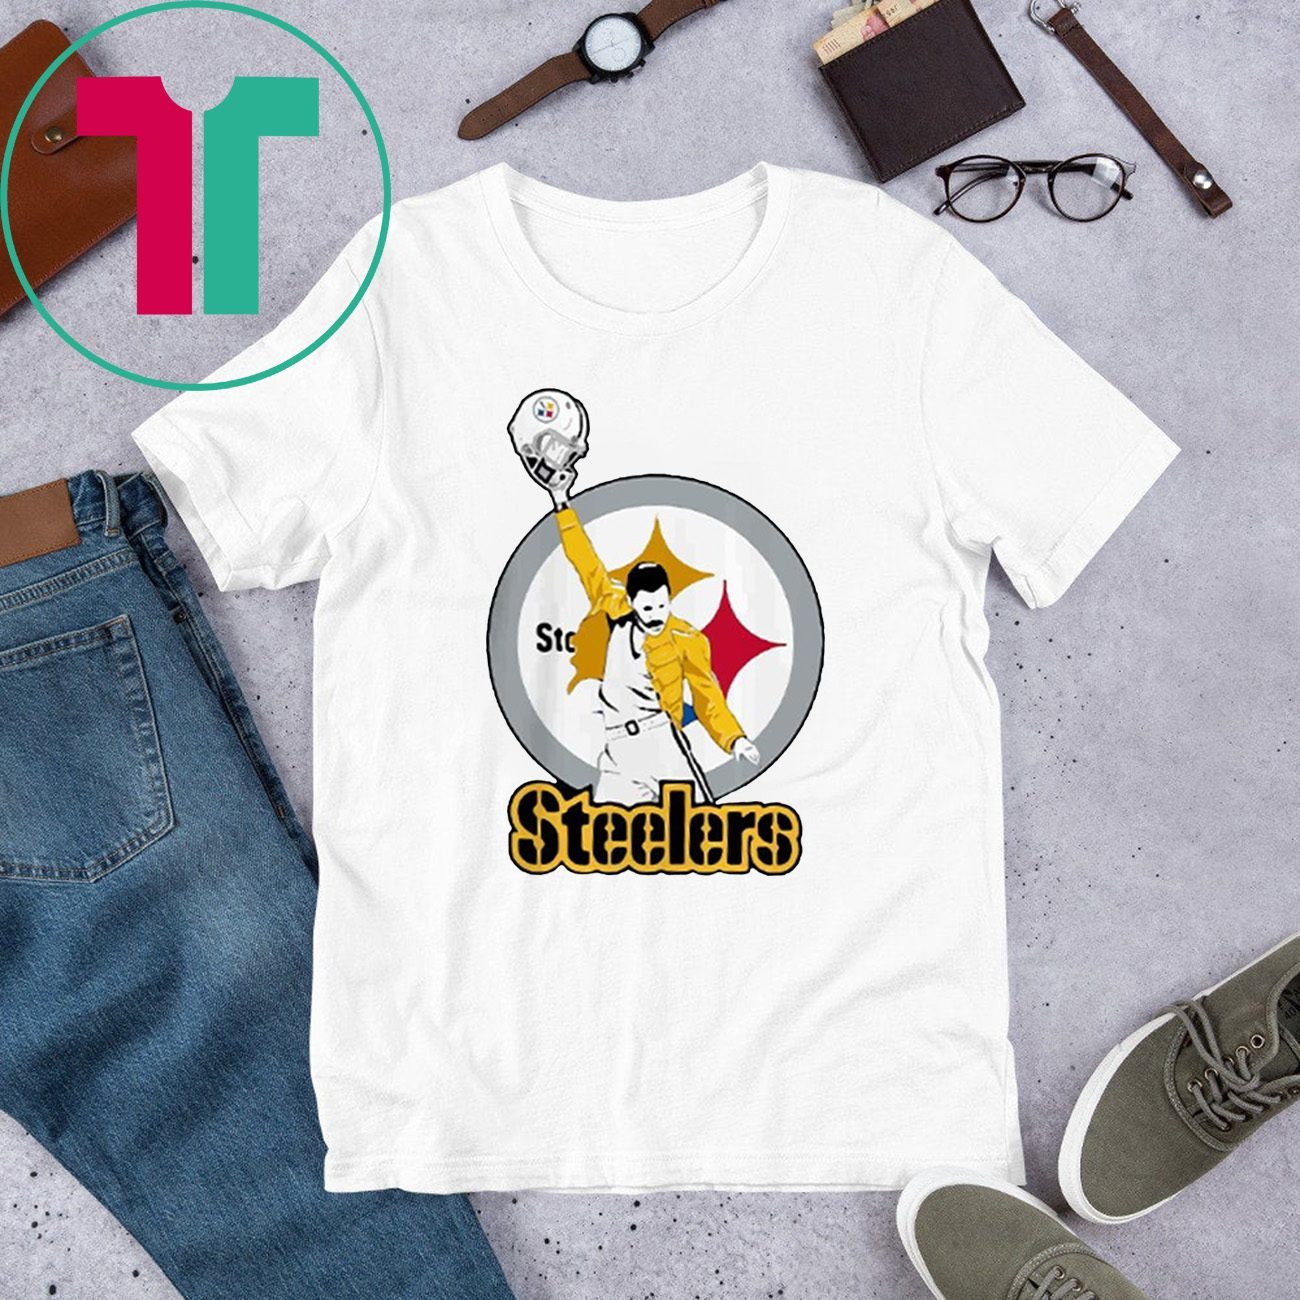 unique steelers t shirts